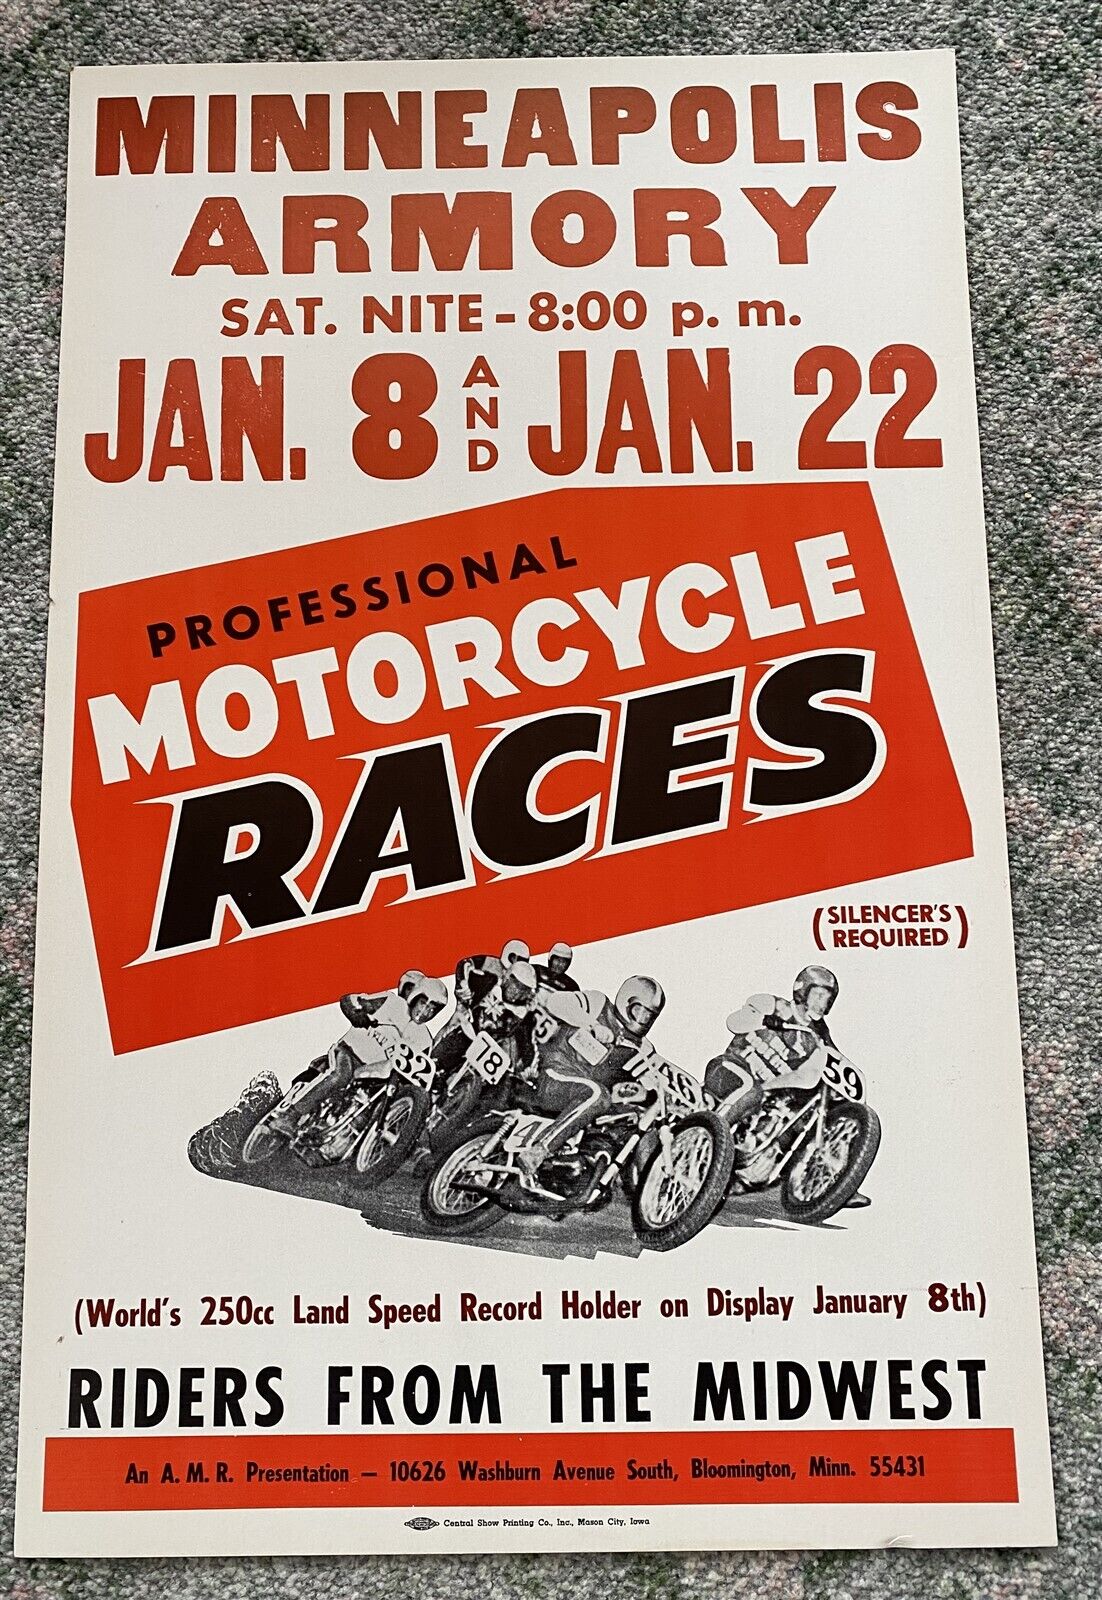 Original Vintage Poster Motorcycle Races Minneapolis Armory 22